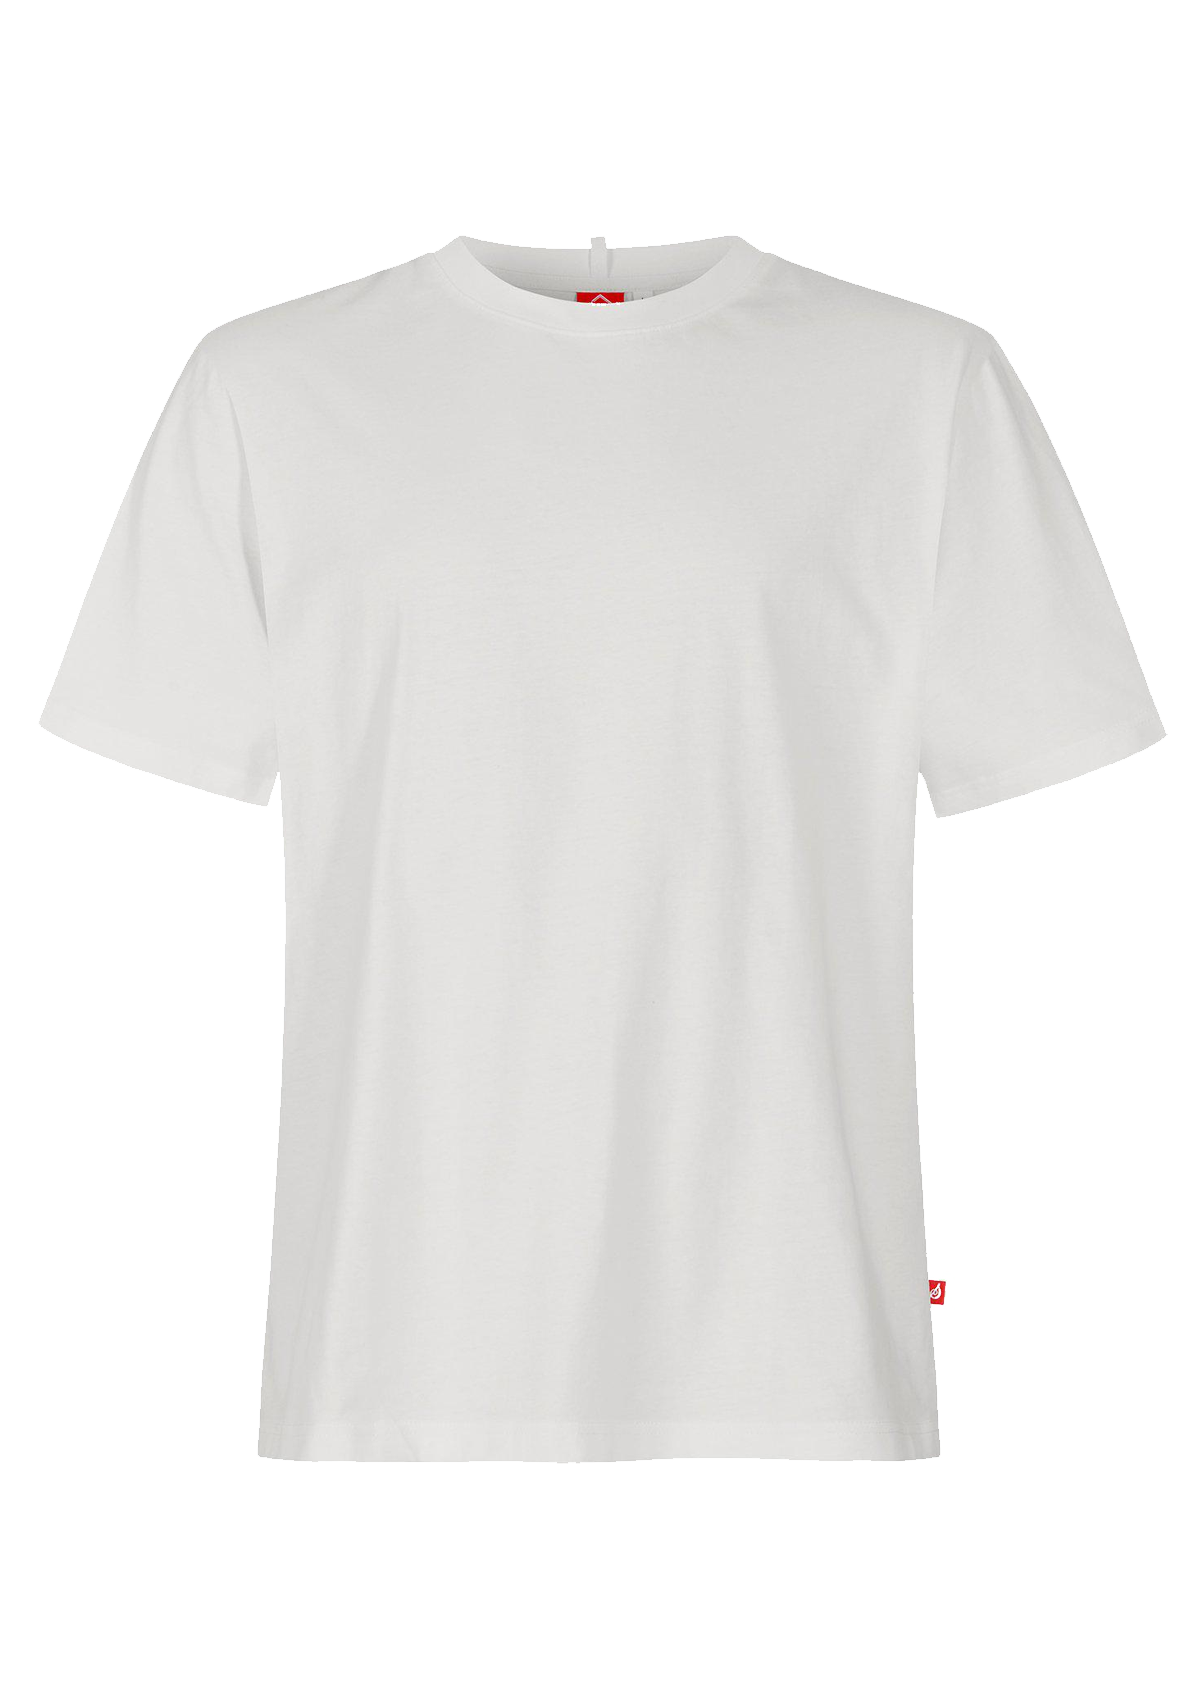 T-shirt Short Sleeves Unisex